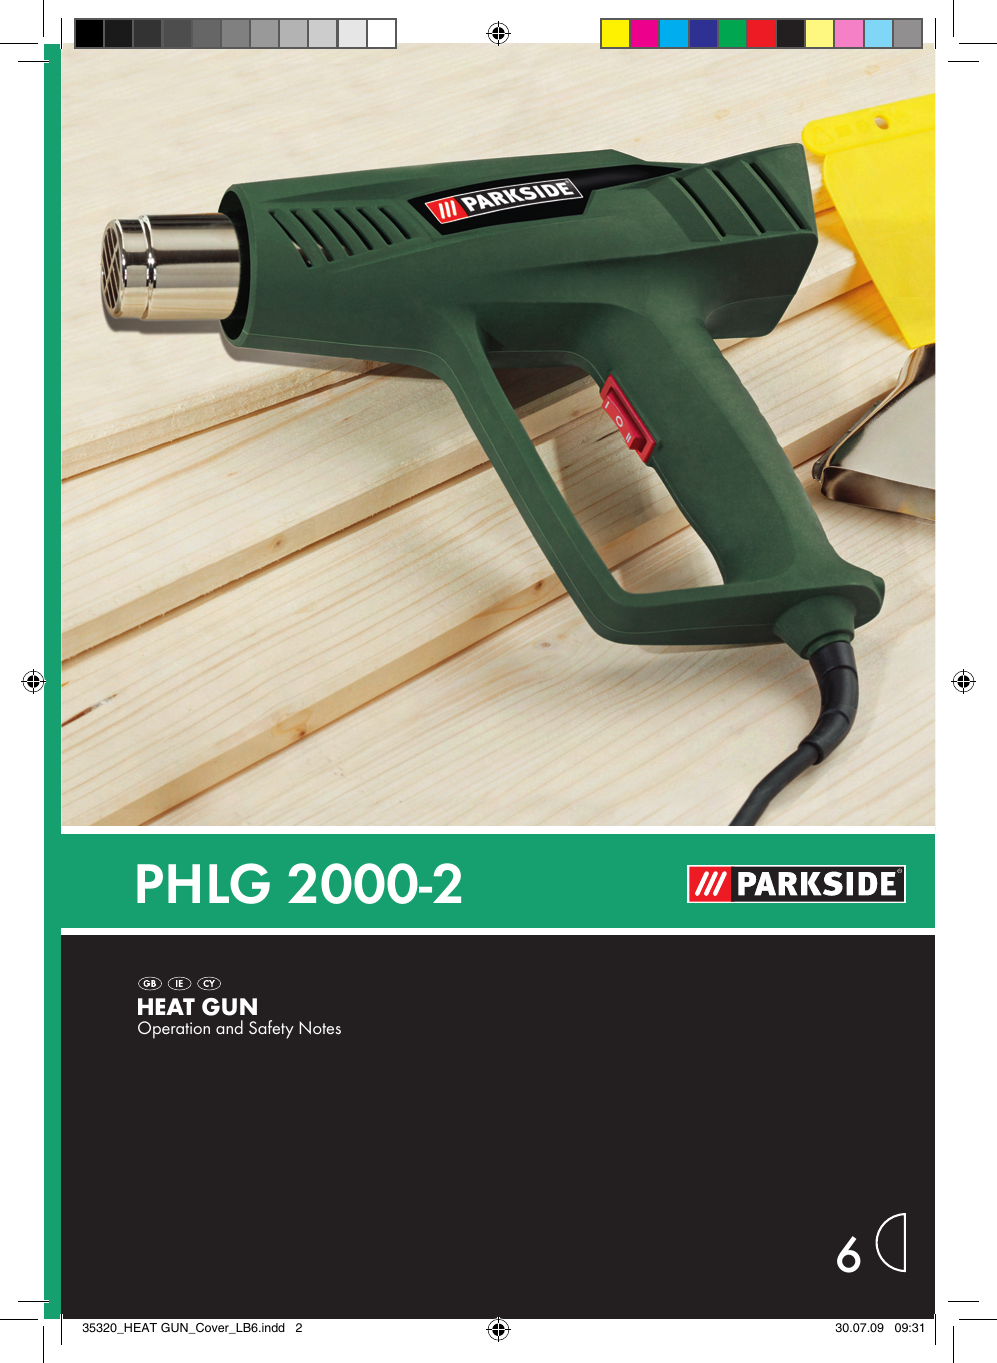 Parkside Phlg 2000 2 Users Manual 35320_HEAT GUN_Content_LB6